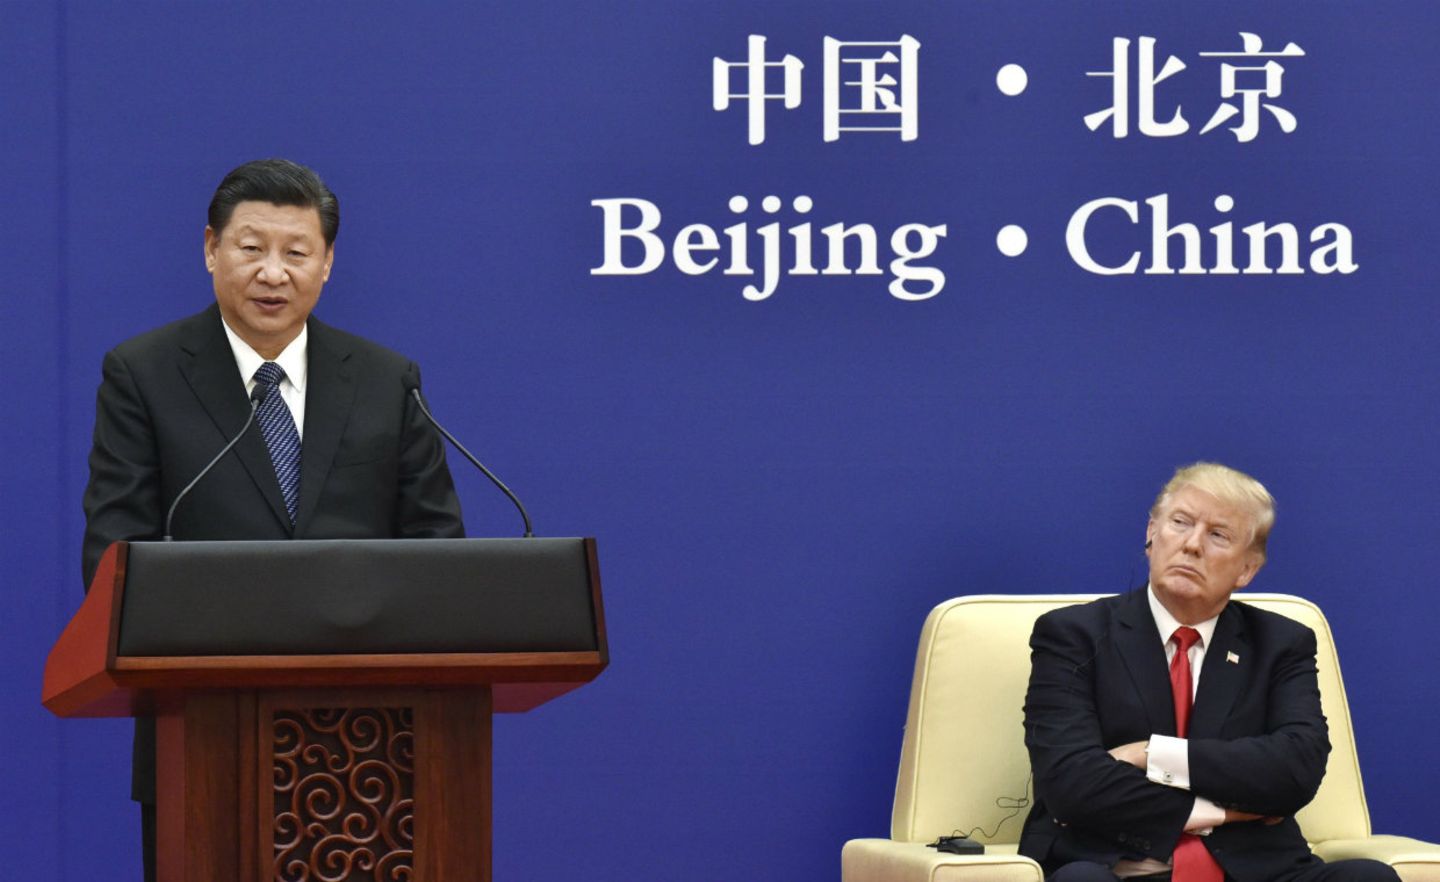 Donald Trump geht auf Kollisionskurs zu Chinas Präsident Xi Jinping